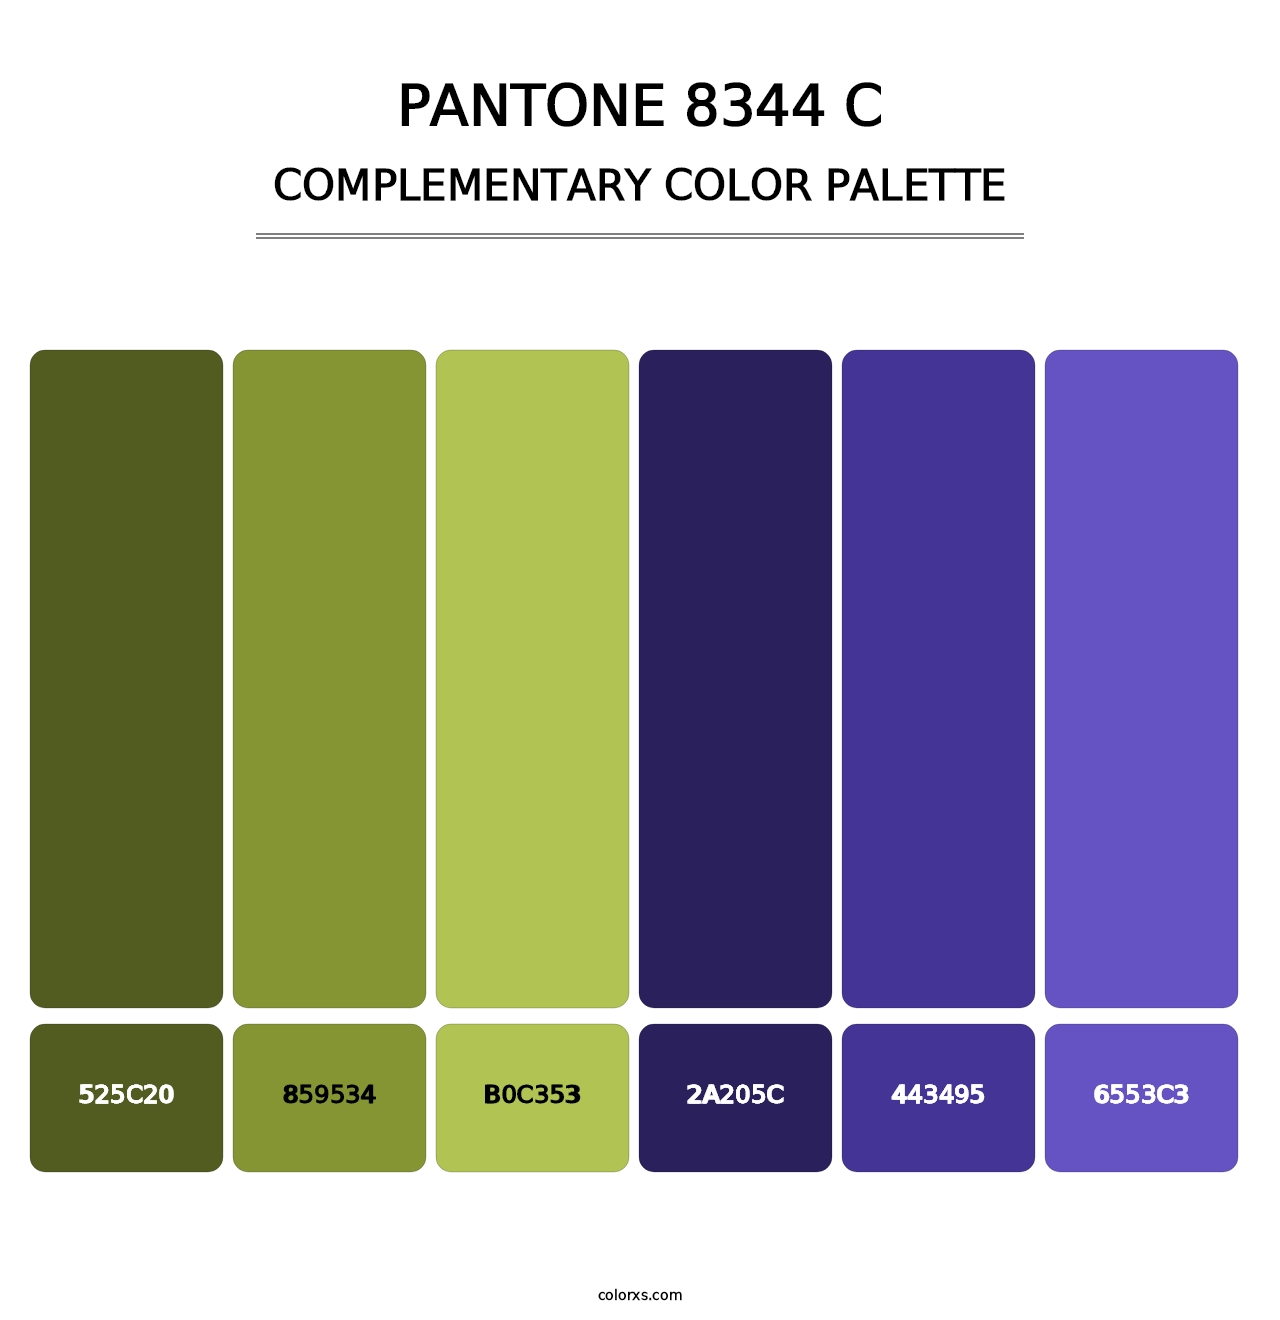 PANTONE 8344 C - Complementary Color Palette